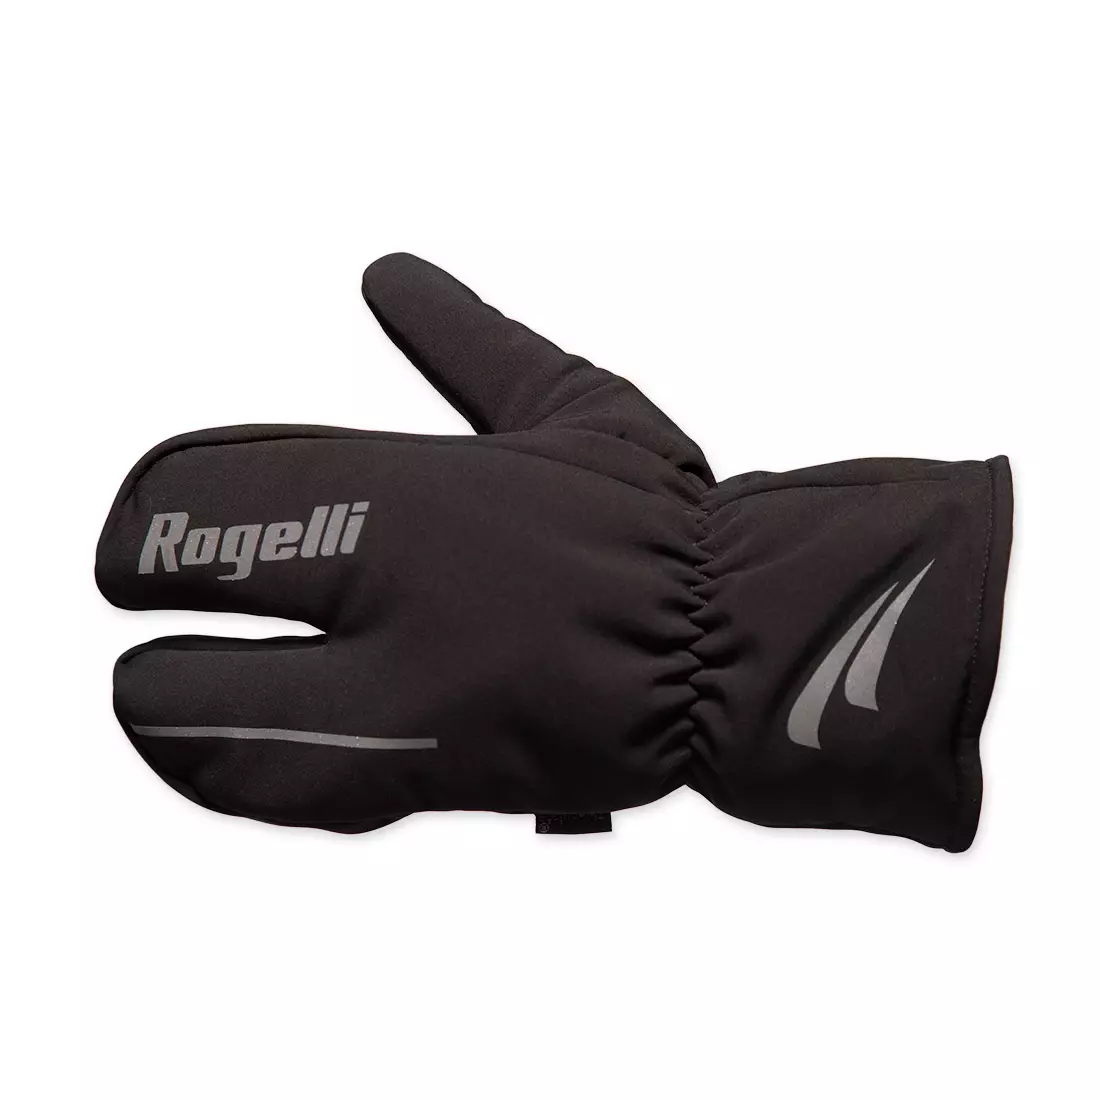 ROGELLI KENO zimné cyklistické rukavice, čierne 006.103